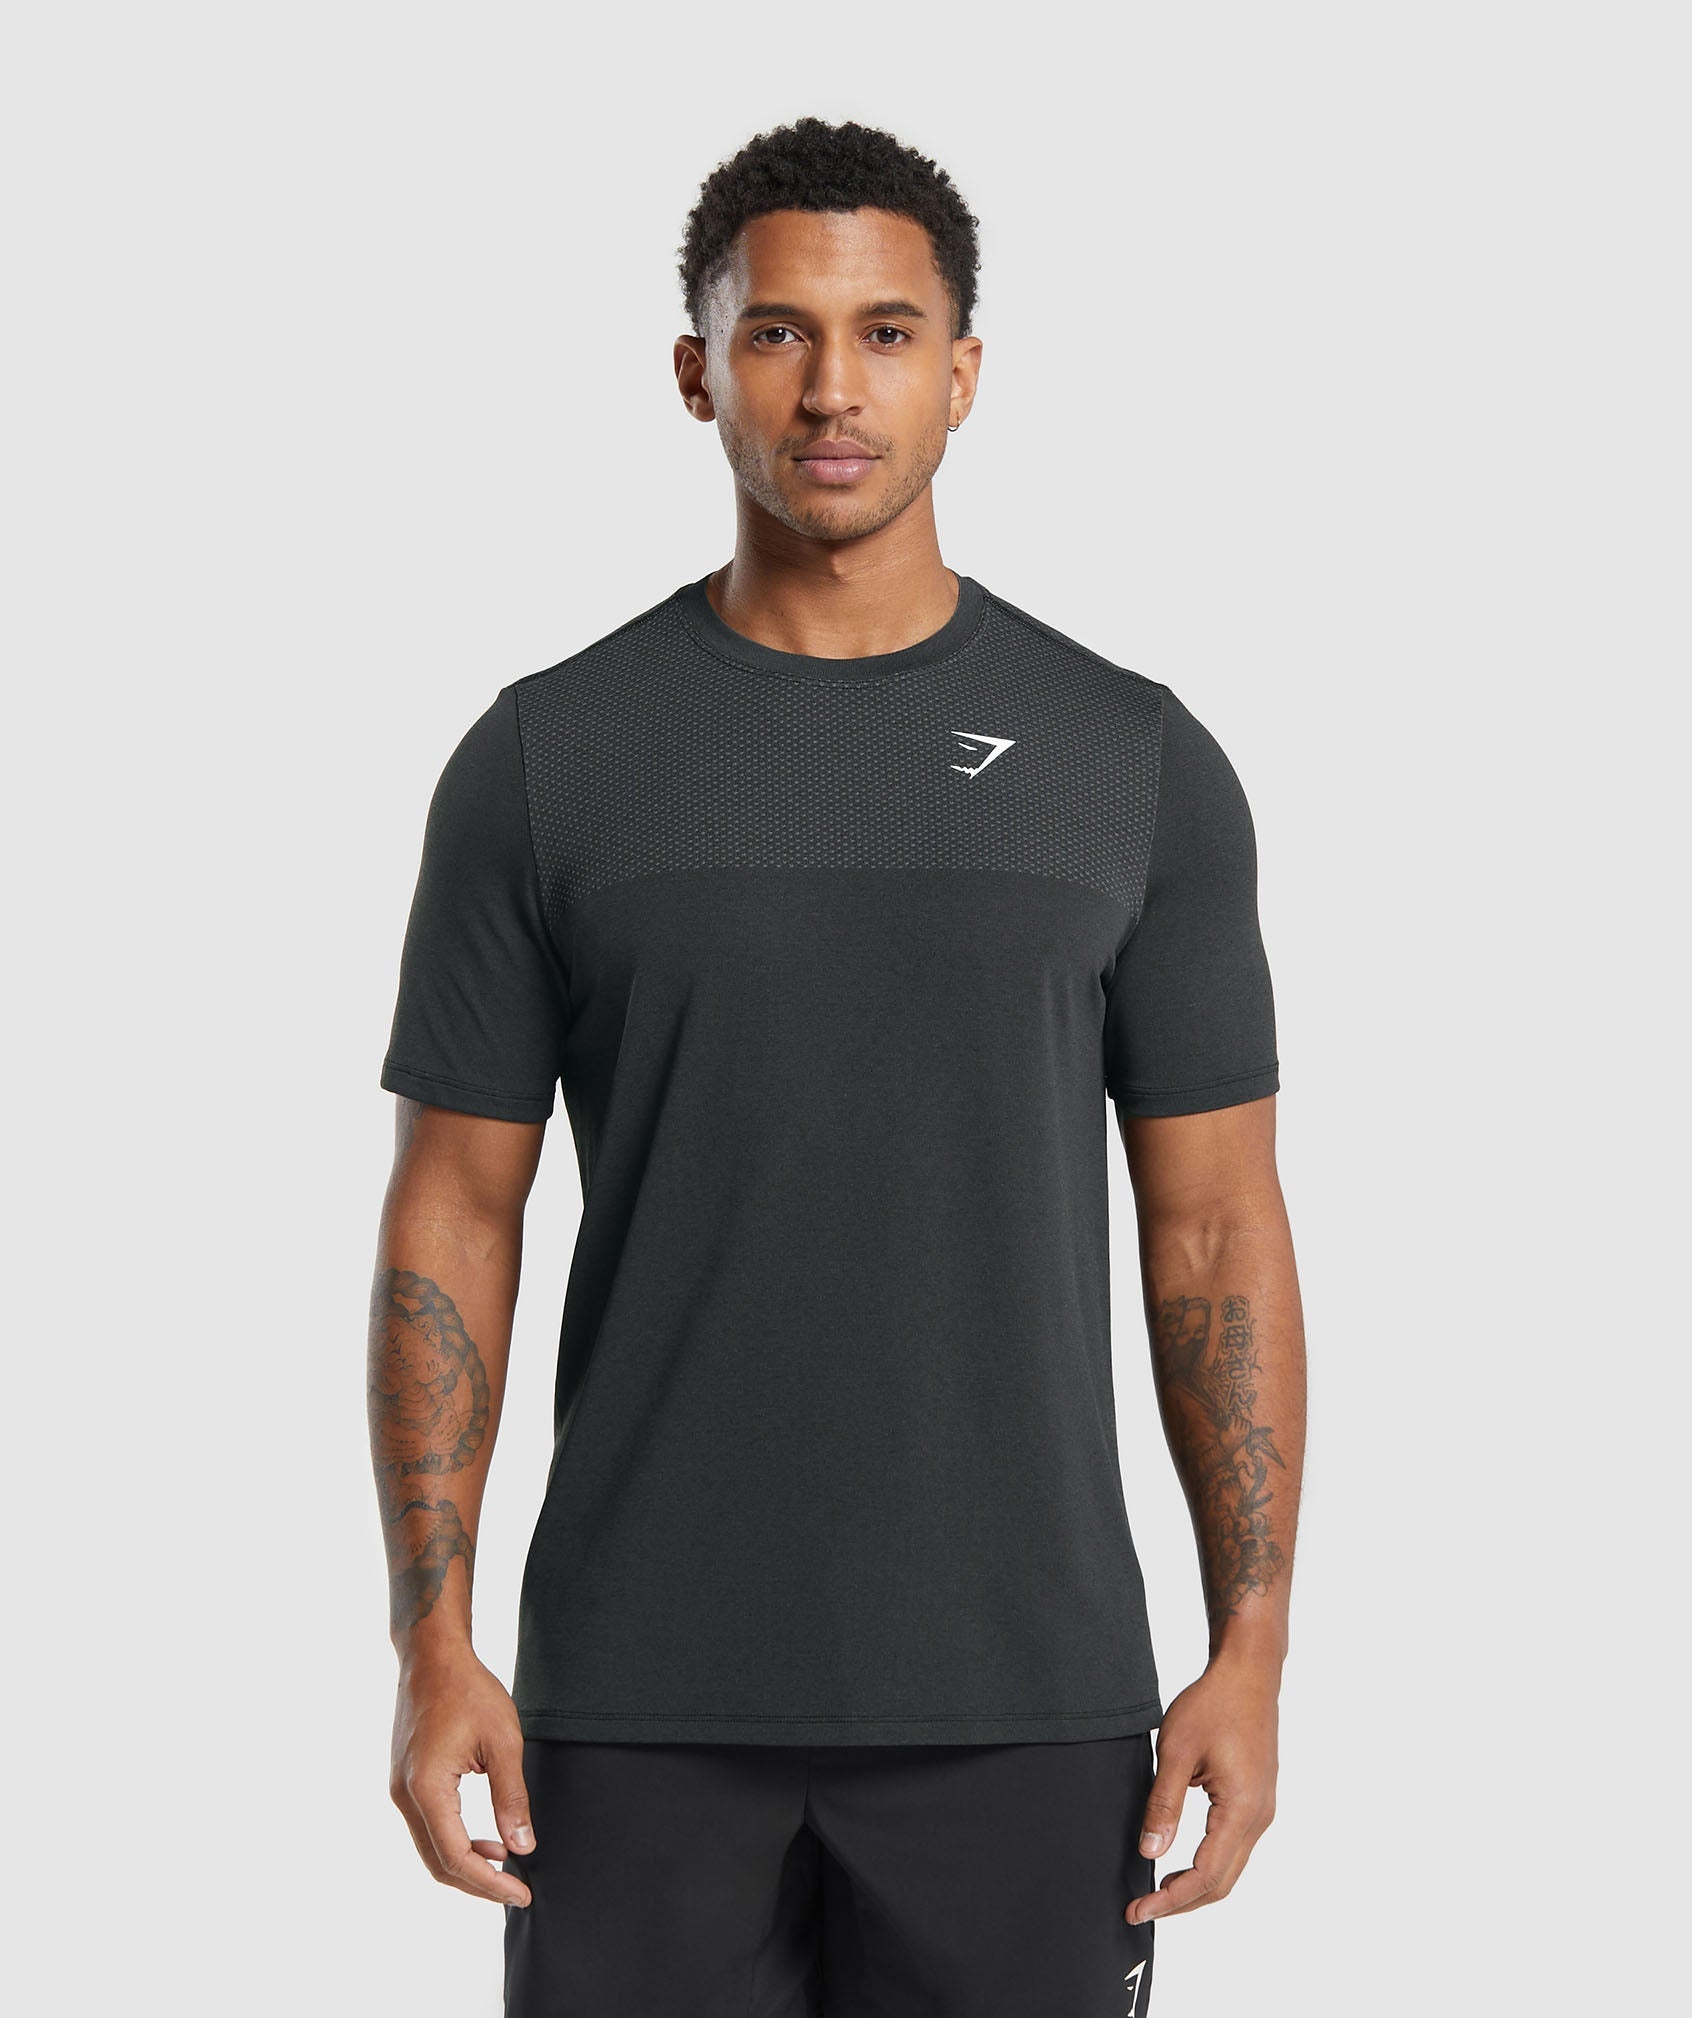 Vital Seamless T-Shirt in Black/Medium Grey Marl - view 1